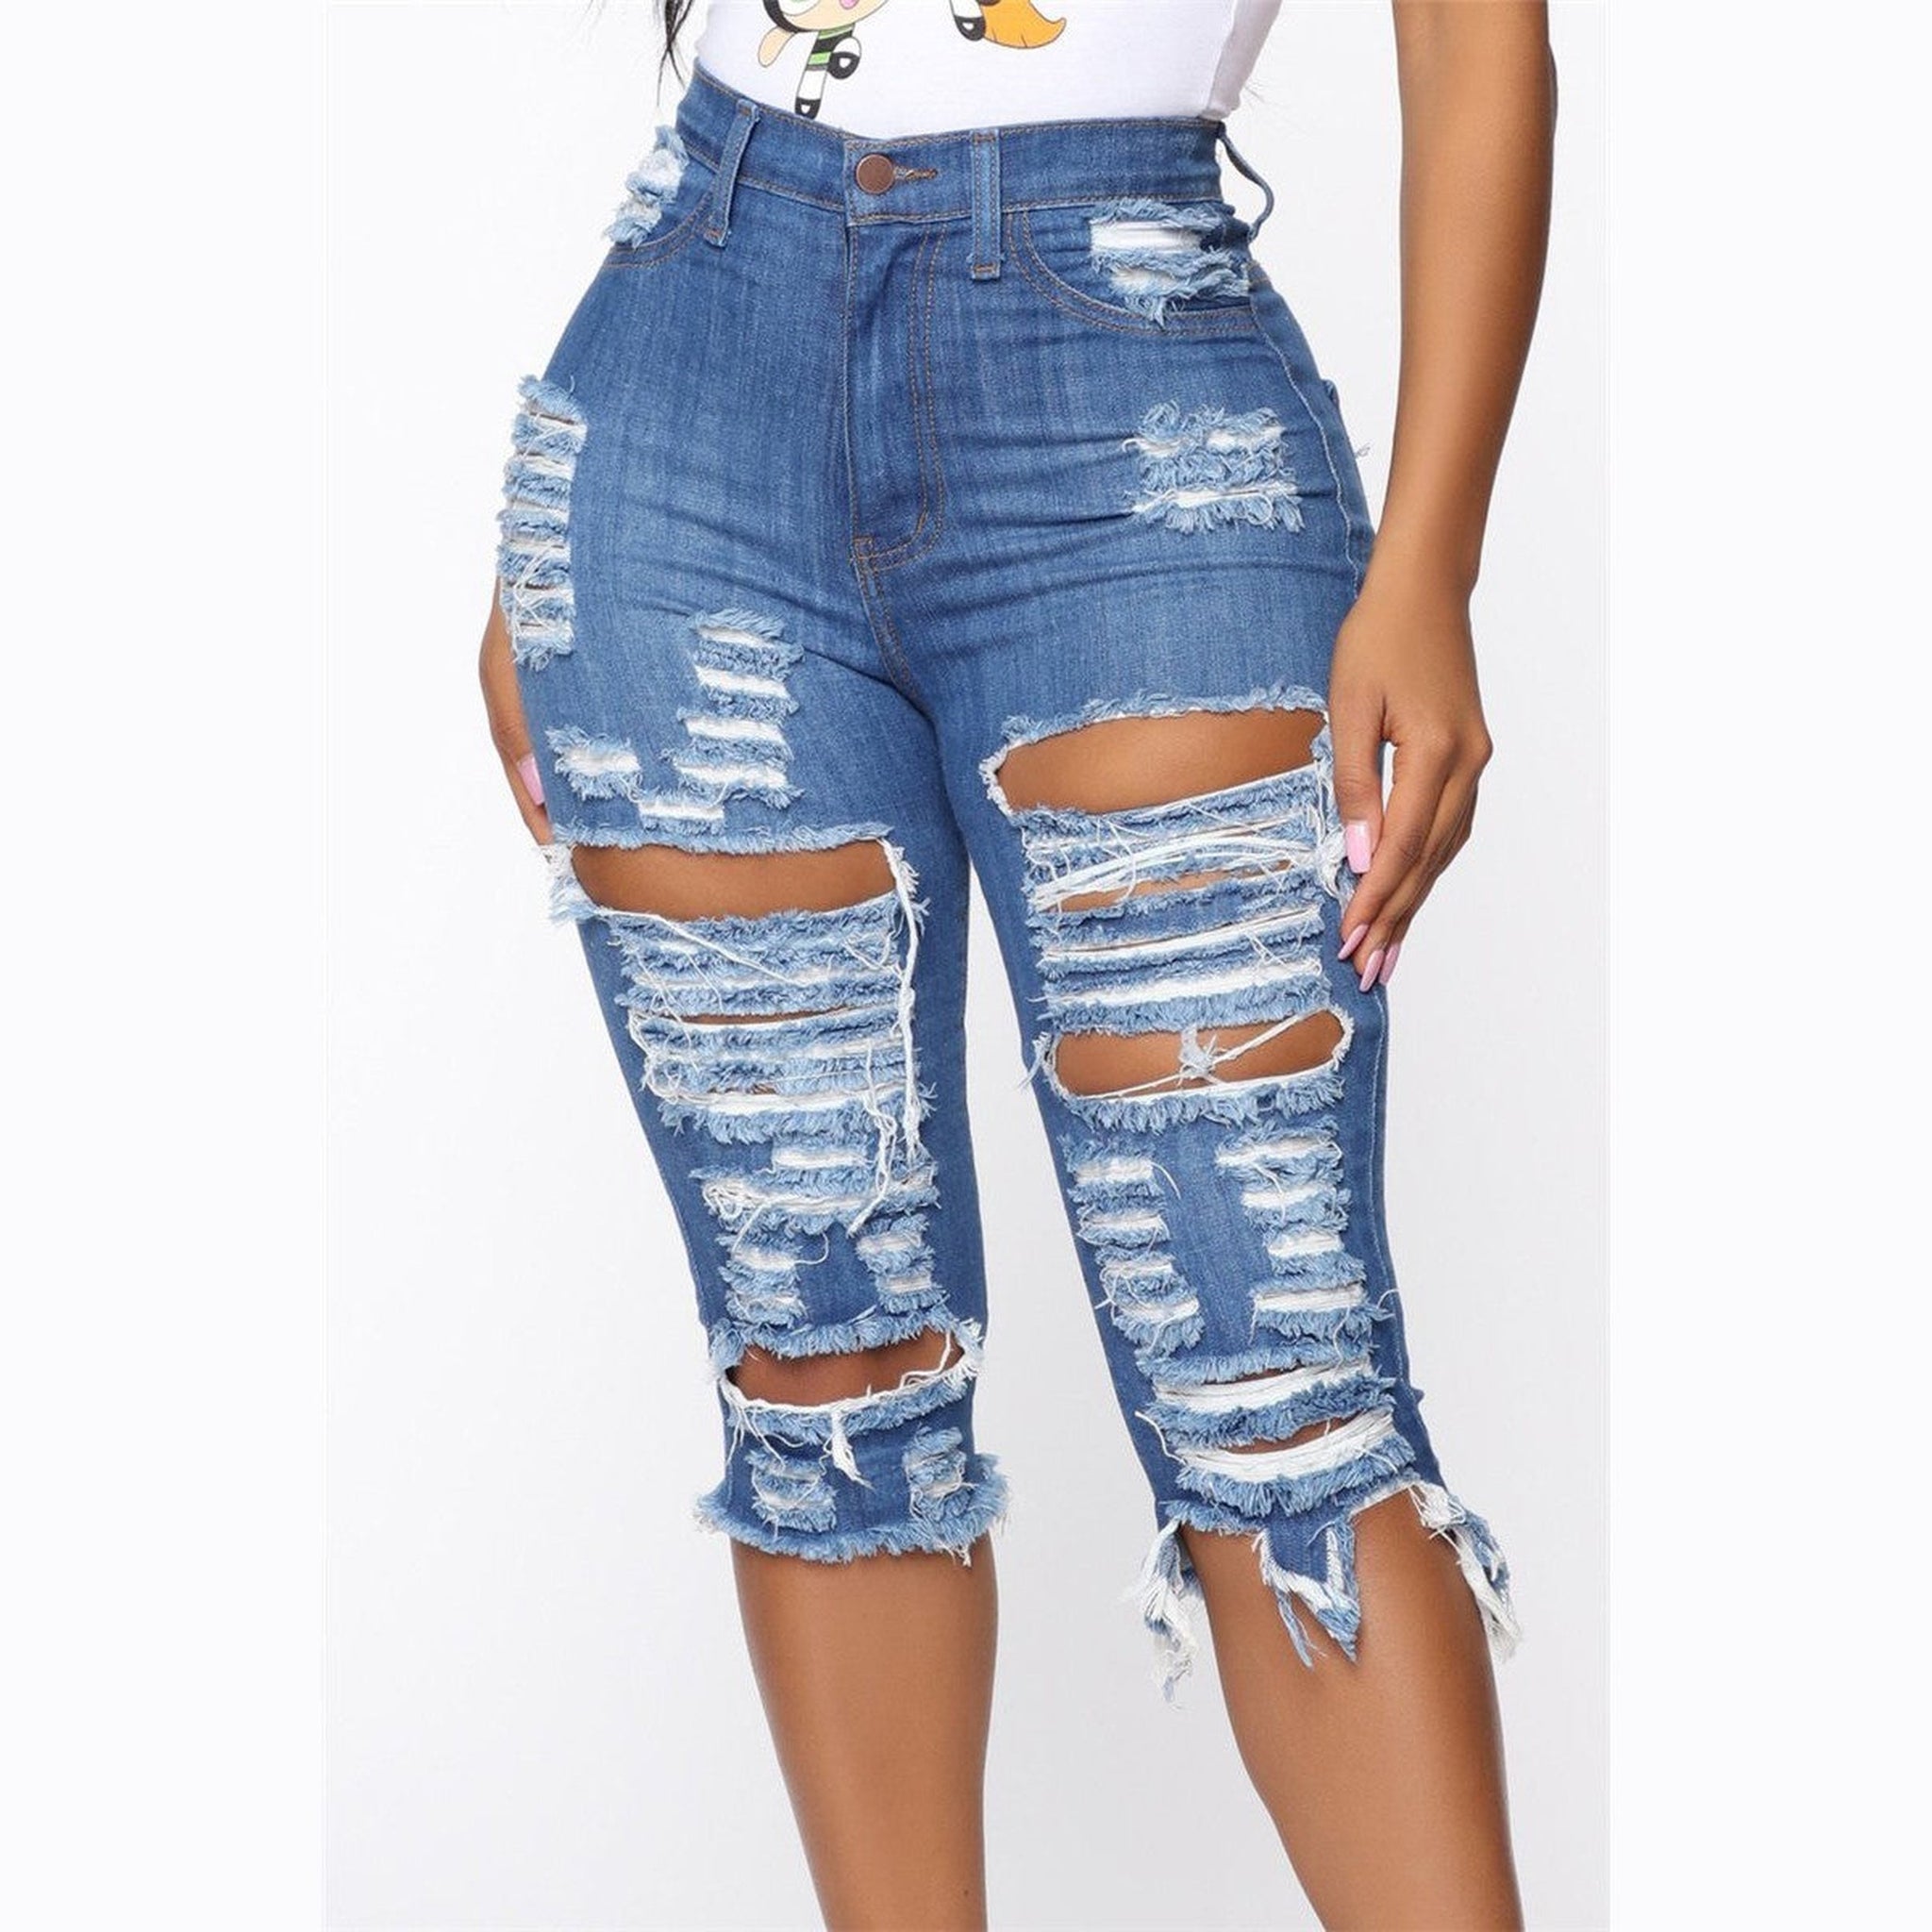 Distressed high waist stretch holes summer stylish crop jeans bottoms